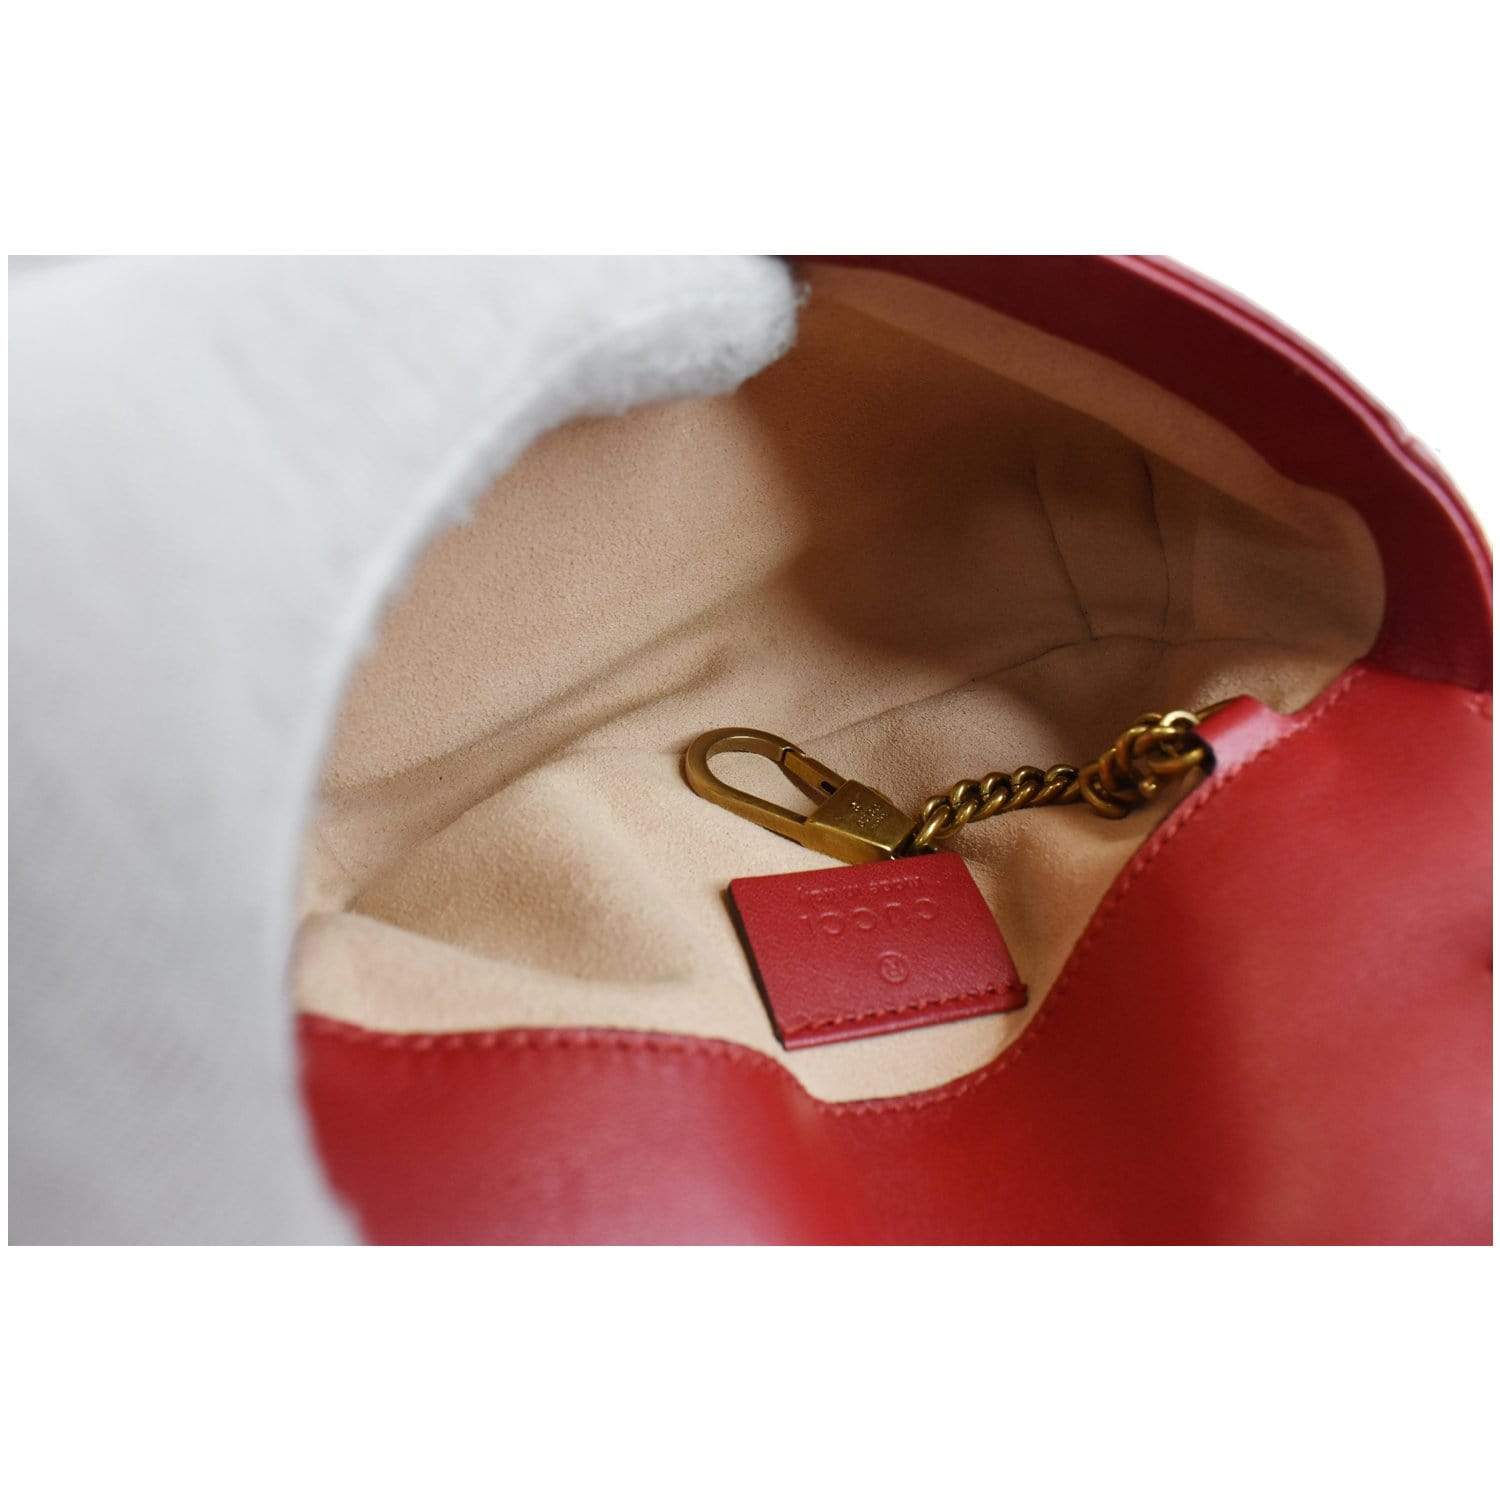 Gucci GG Marmont Matelasse Leather Super Mini Bag Red